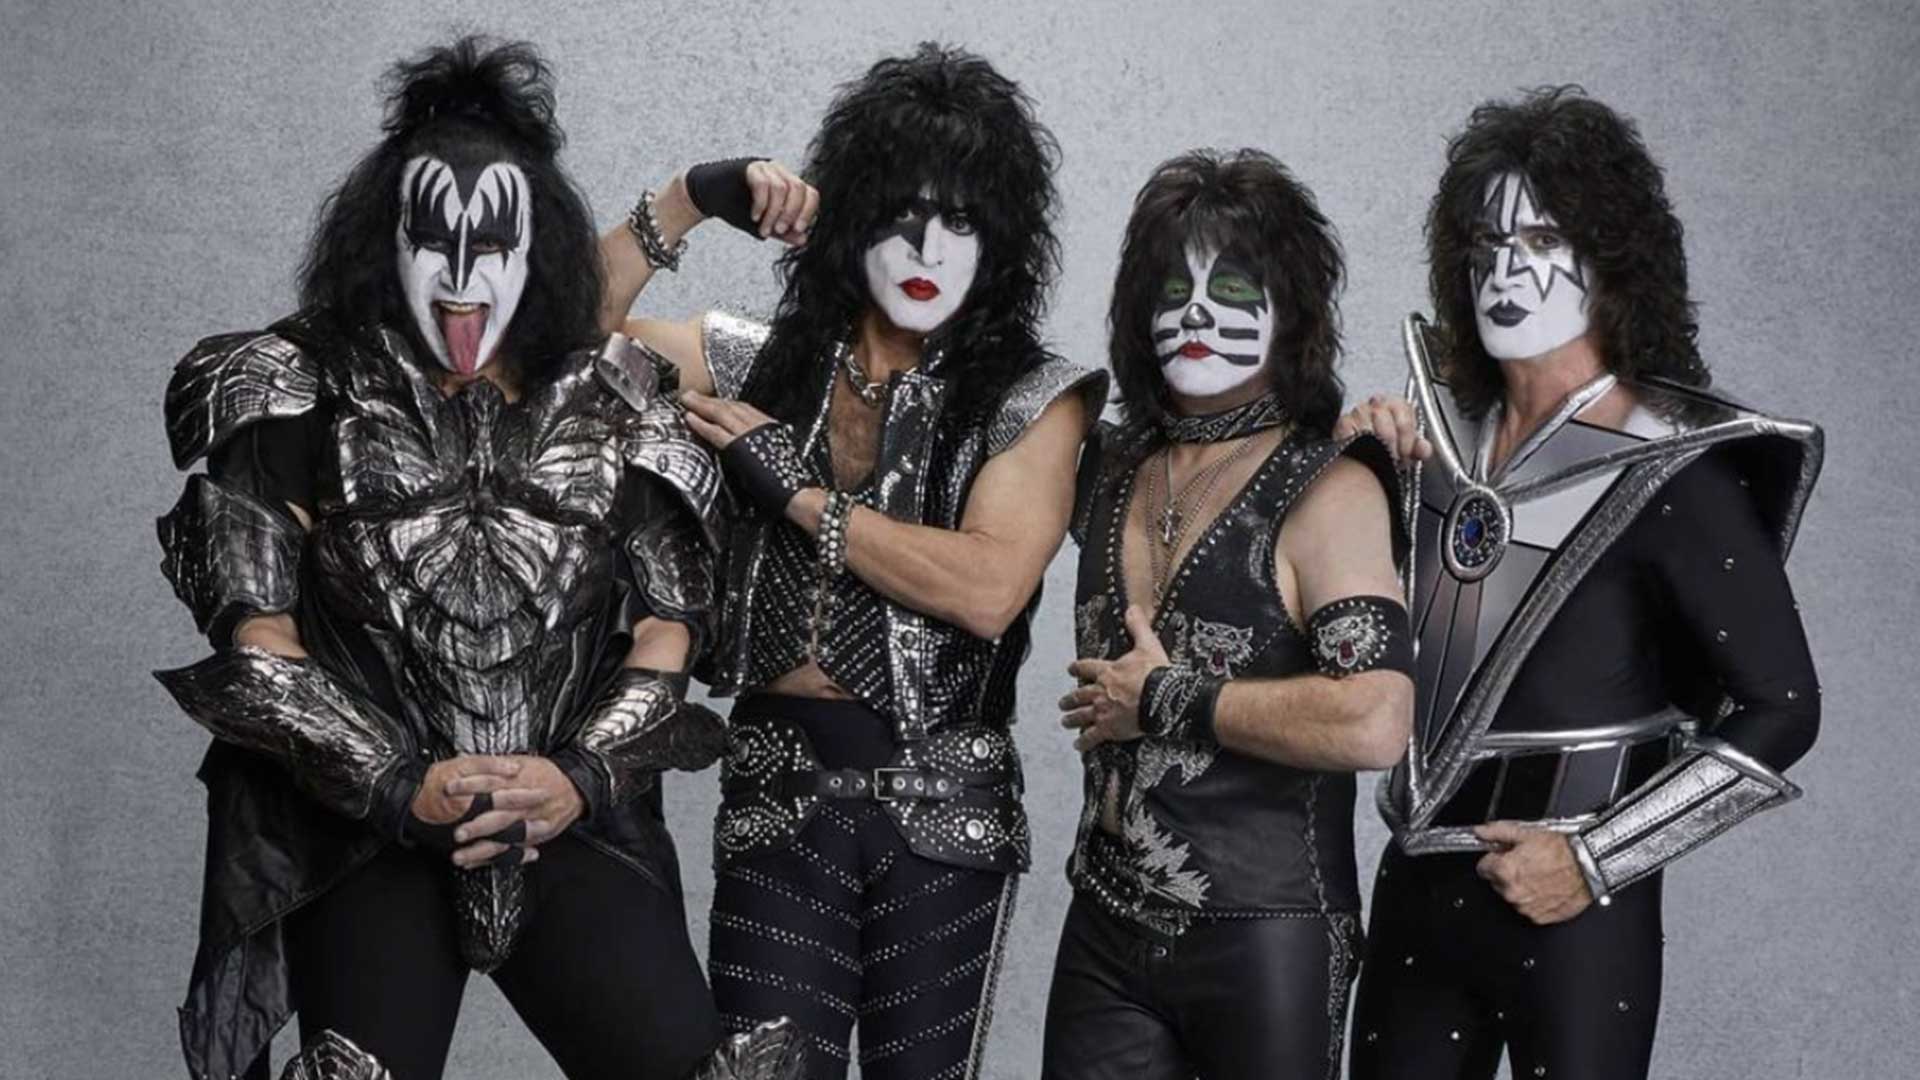 The rock band Kiss